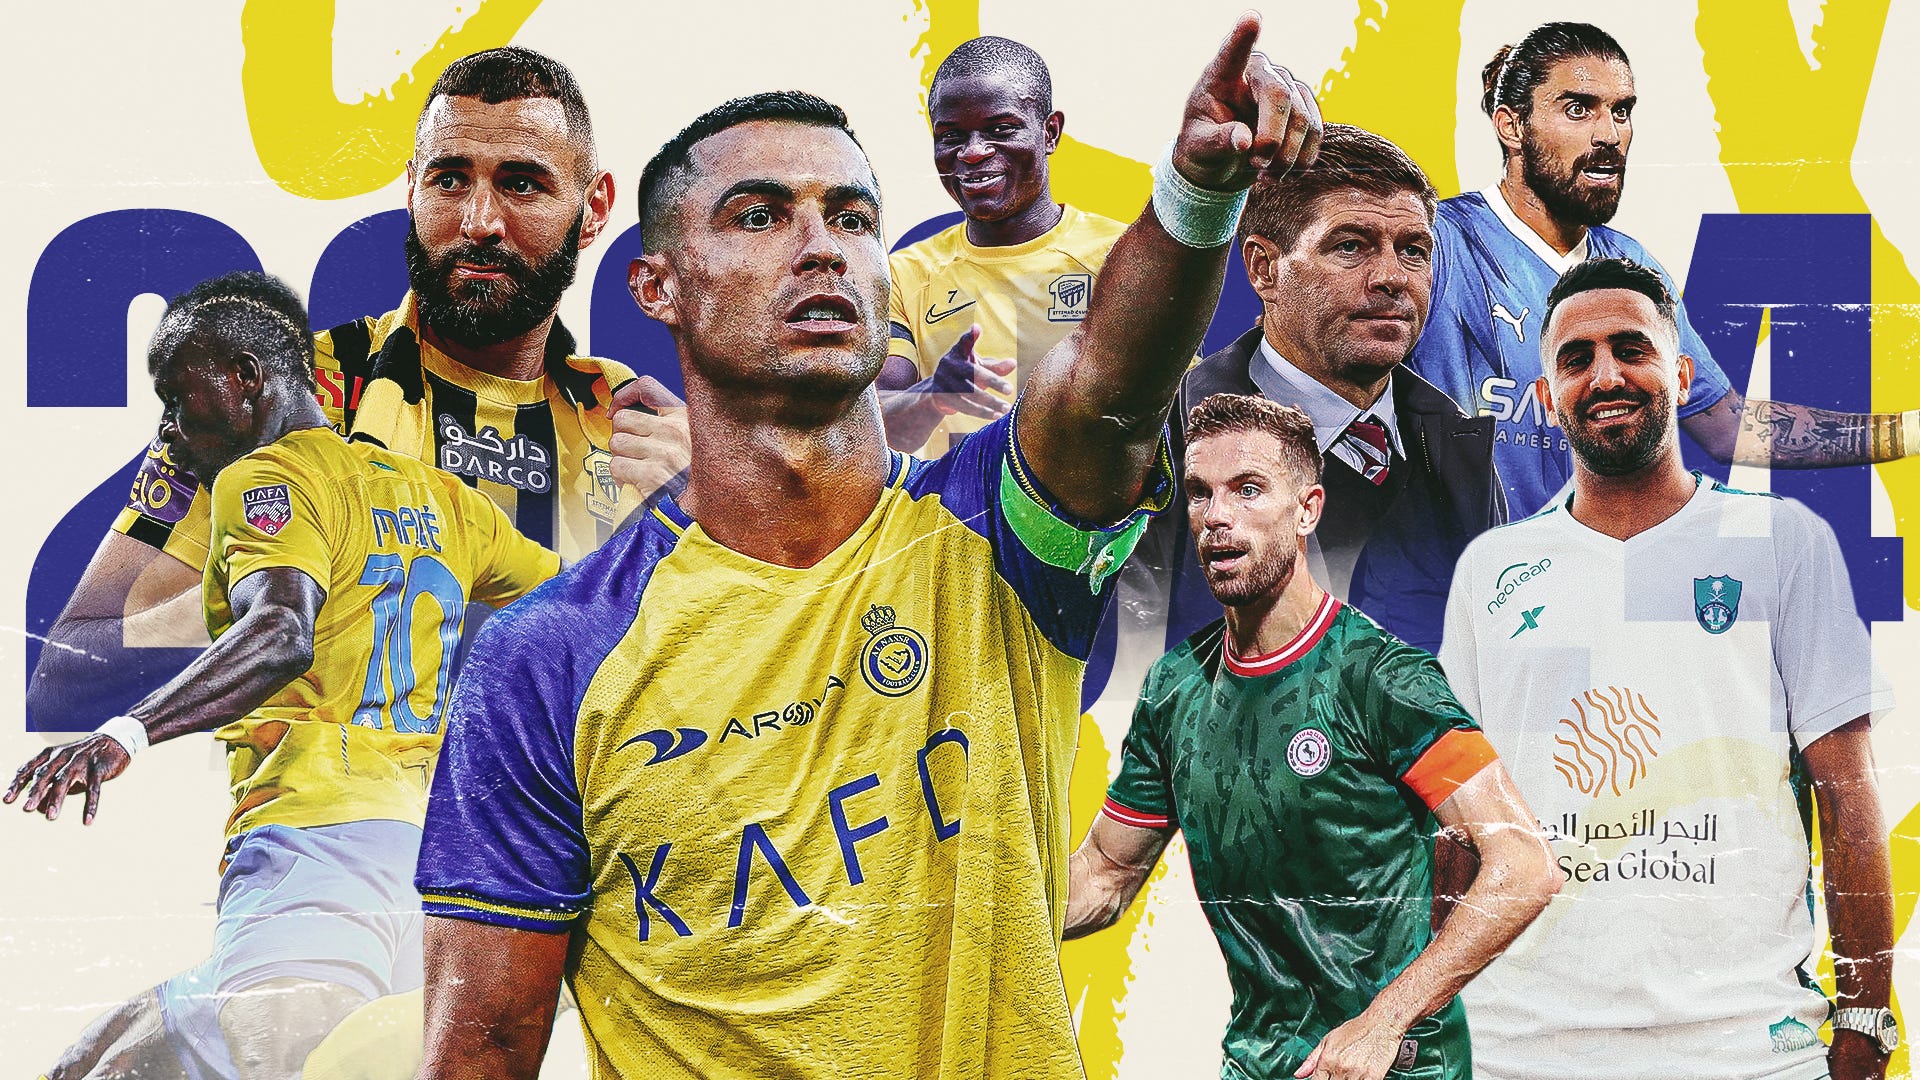 Saudi Pro League 23/24 complete guide: Teams, stars, fixtures